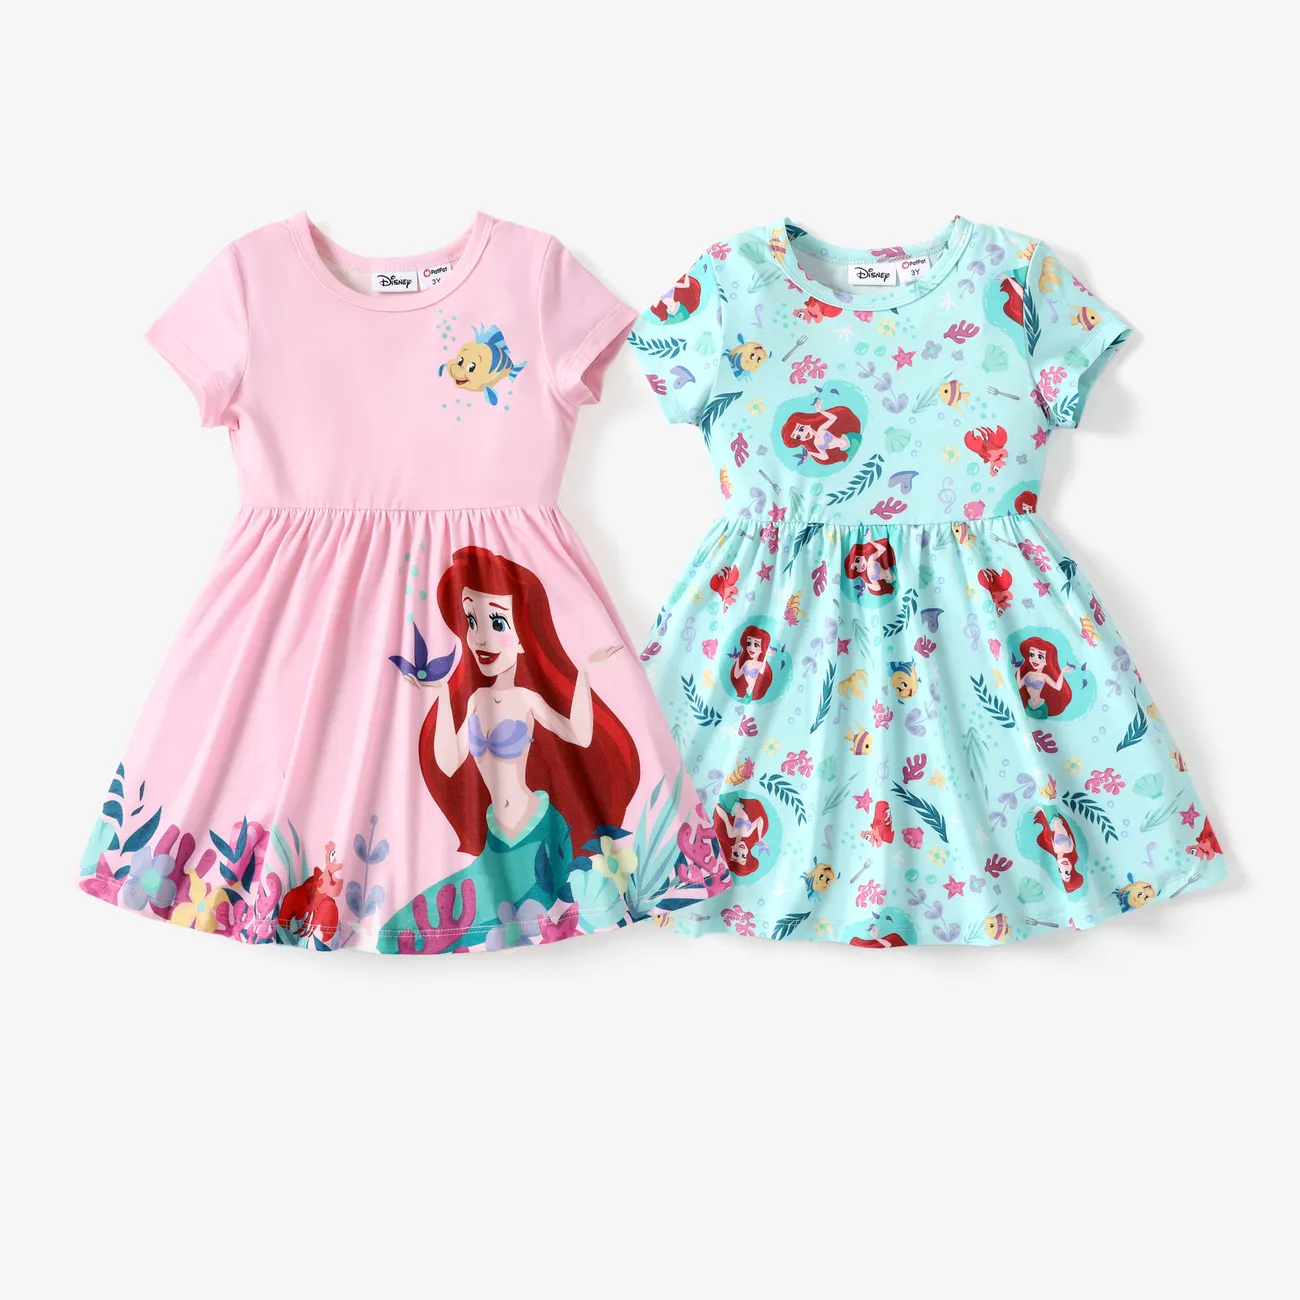 Disney Princess Ariel 1pc Toddler Girls Naia™ Short-Sleeve Character All-over Print Floral Dress Pink big image 1